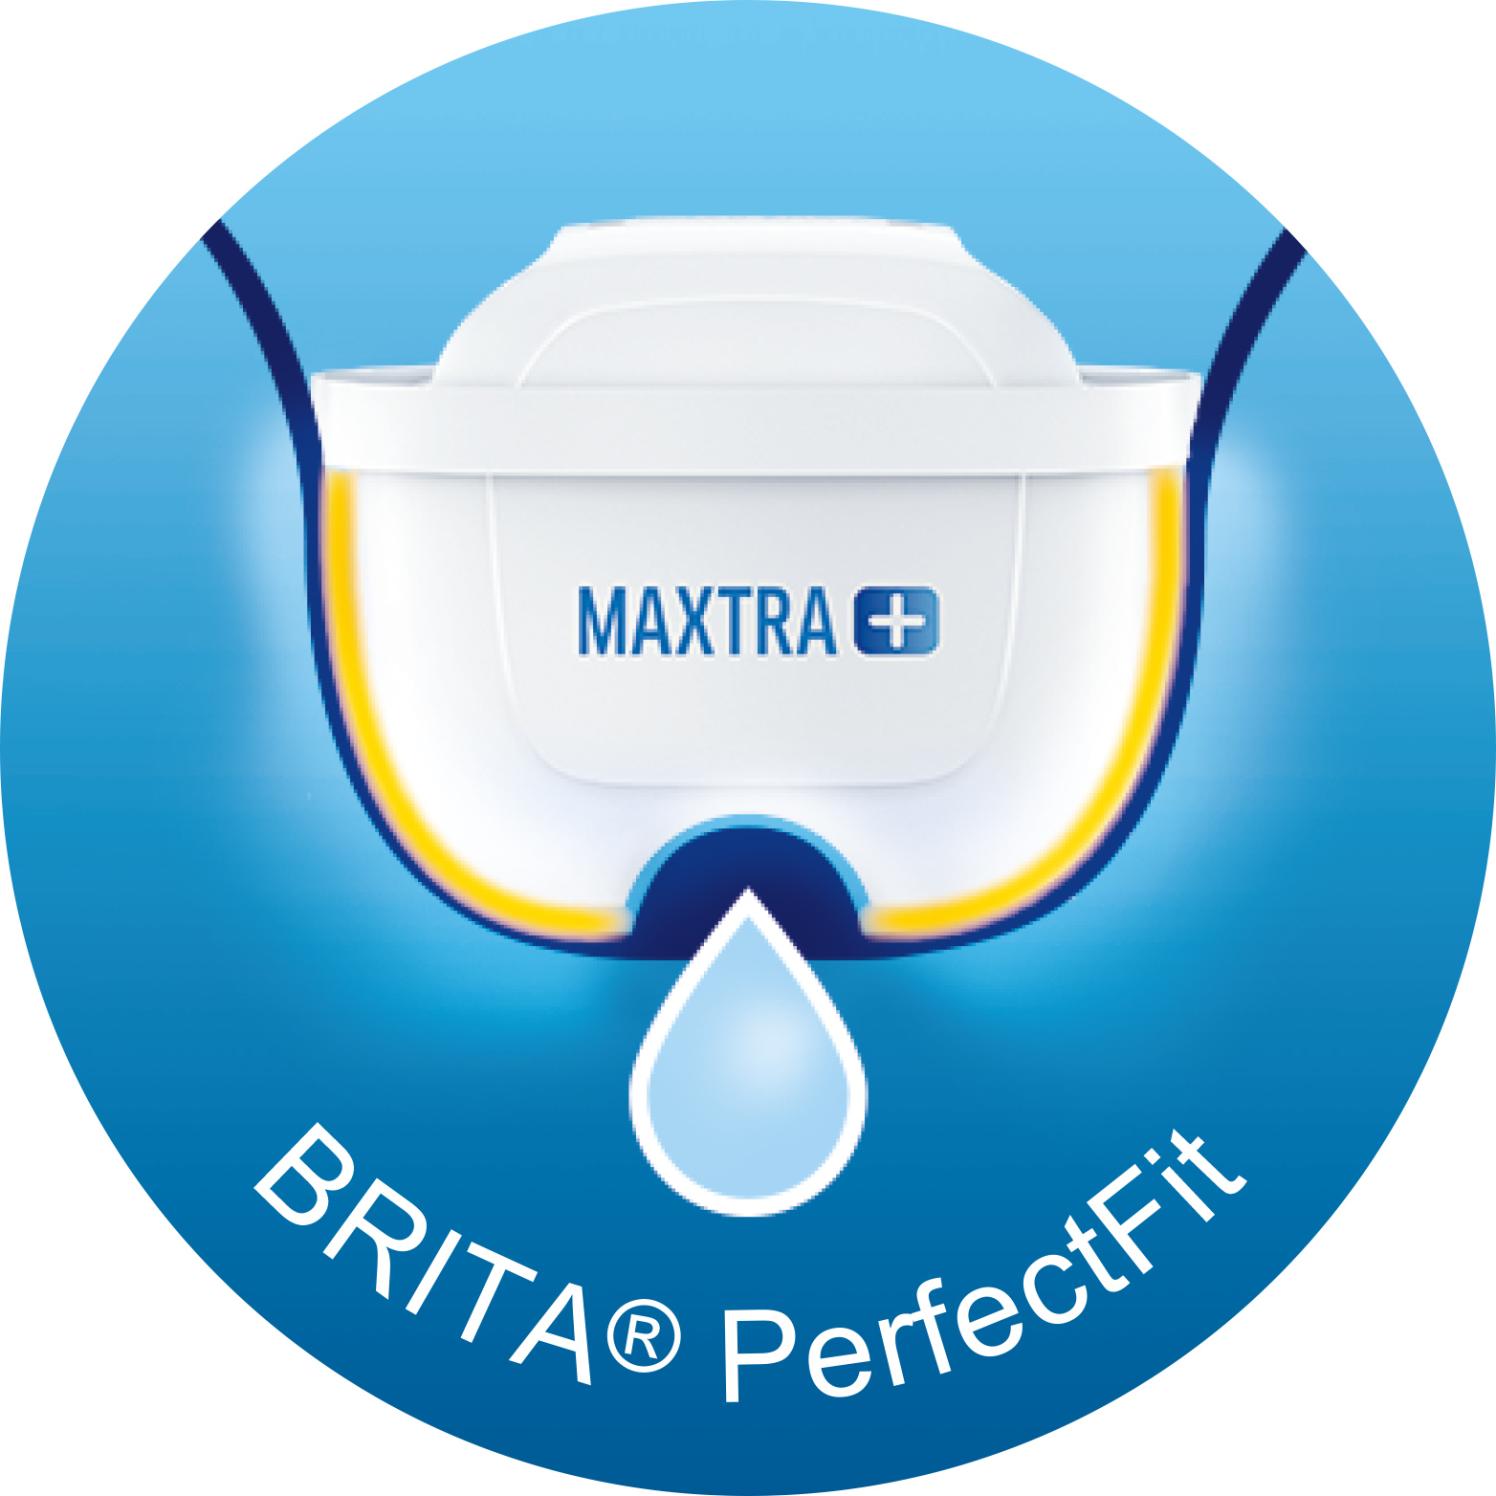 Фільтр для води Brita Marella XL Blue + 2 картриджа огляд - фото 8